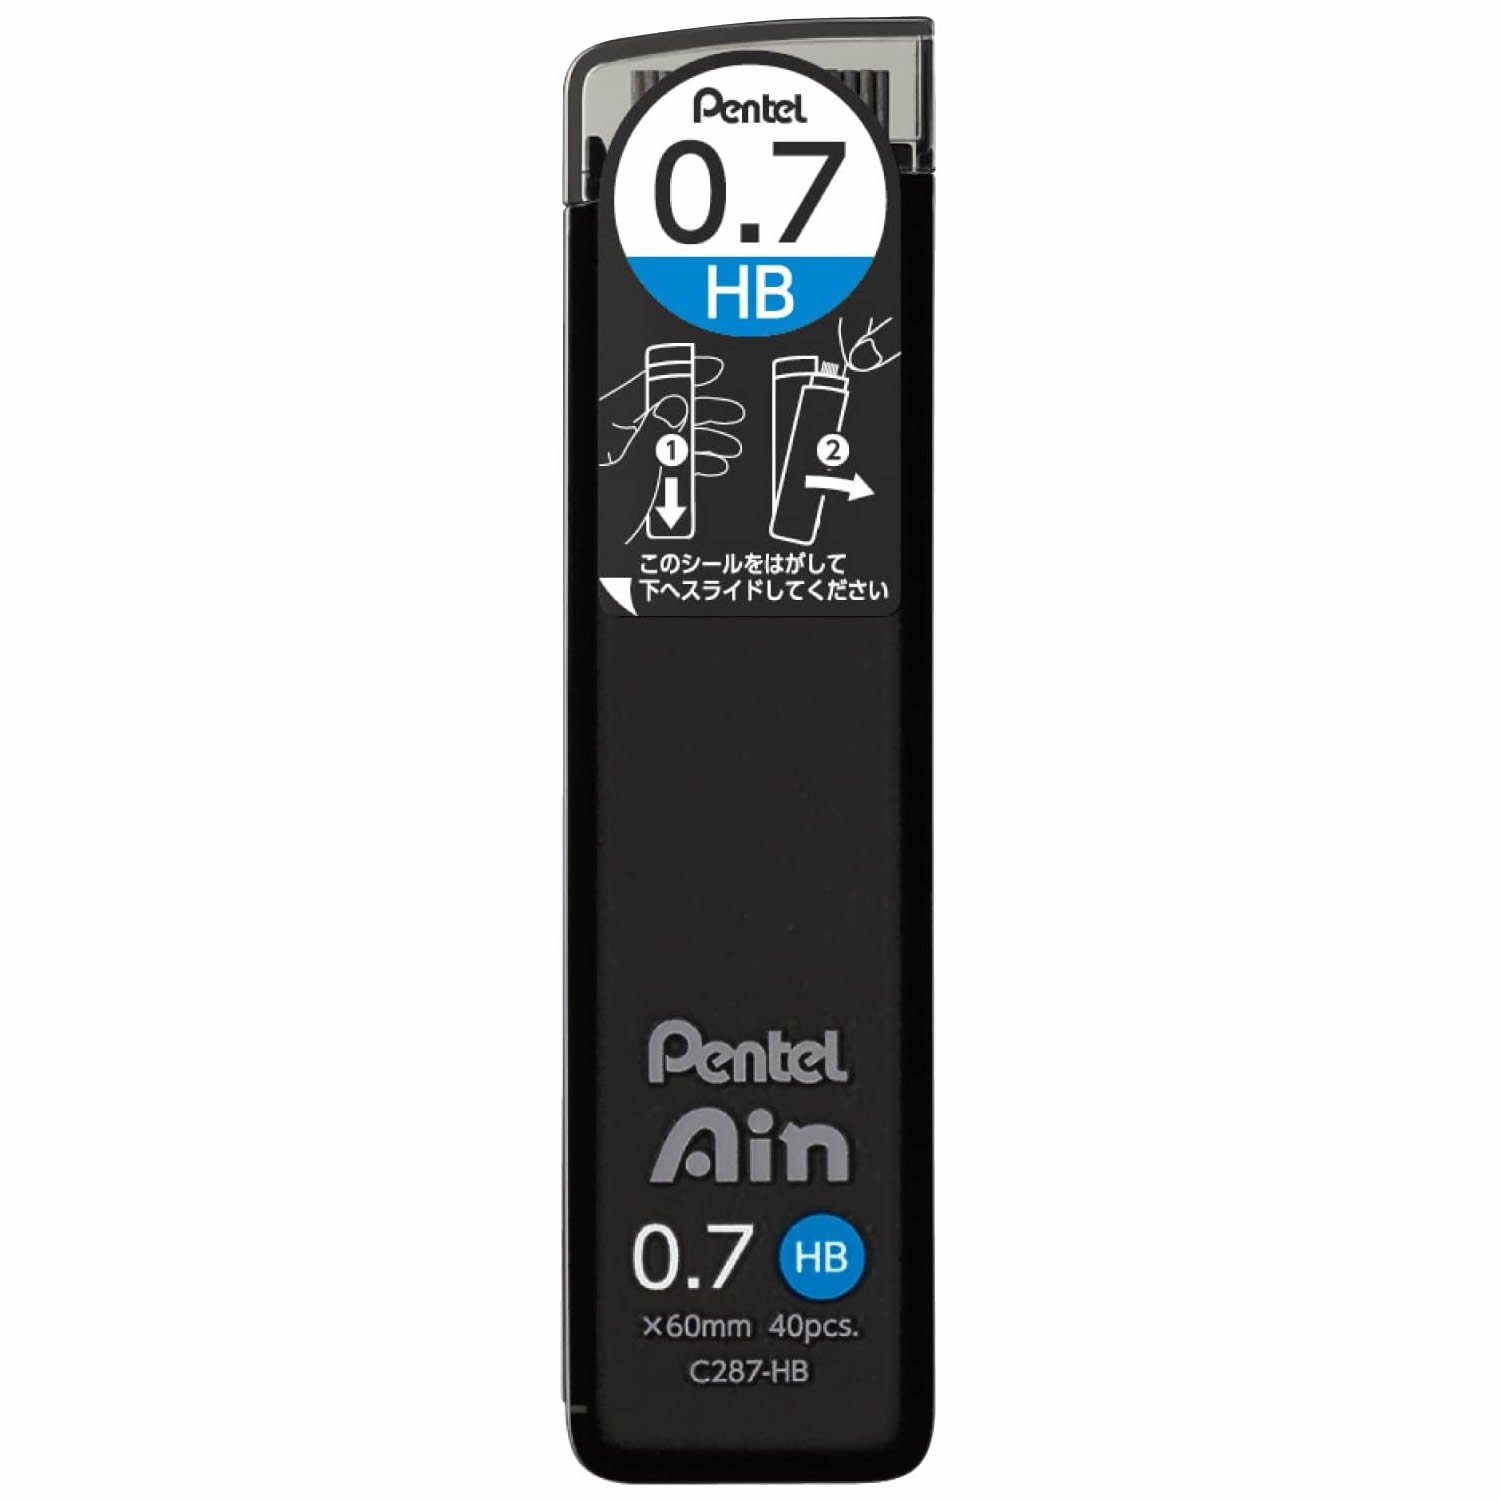 Pentel Ain C287-HB 0.7mm Refill Leads (40 leads per tube), HB